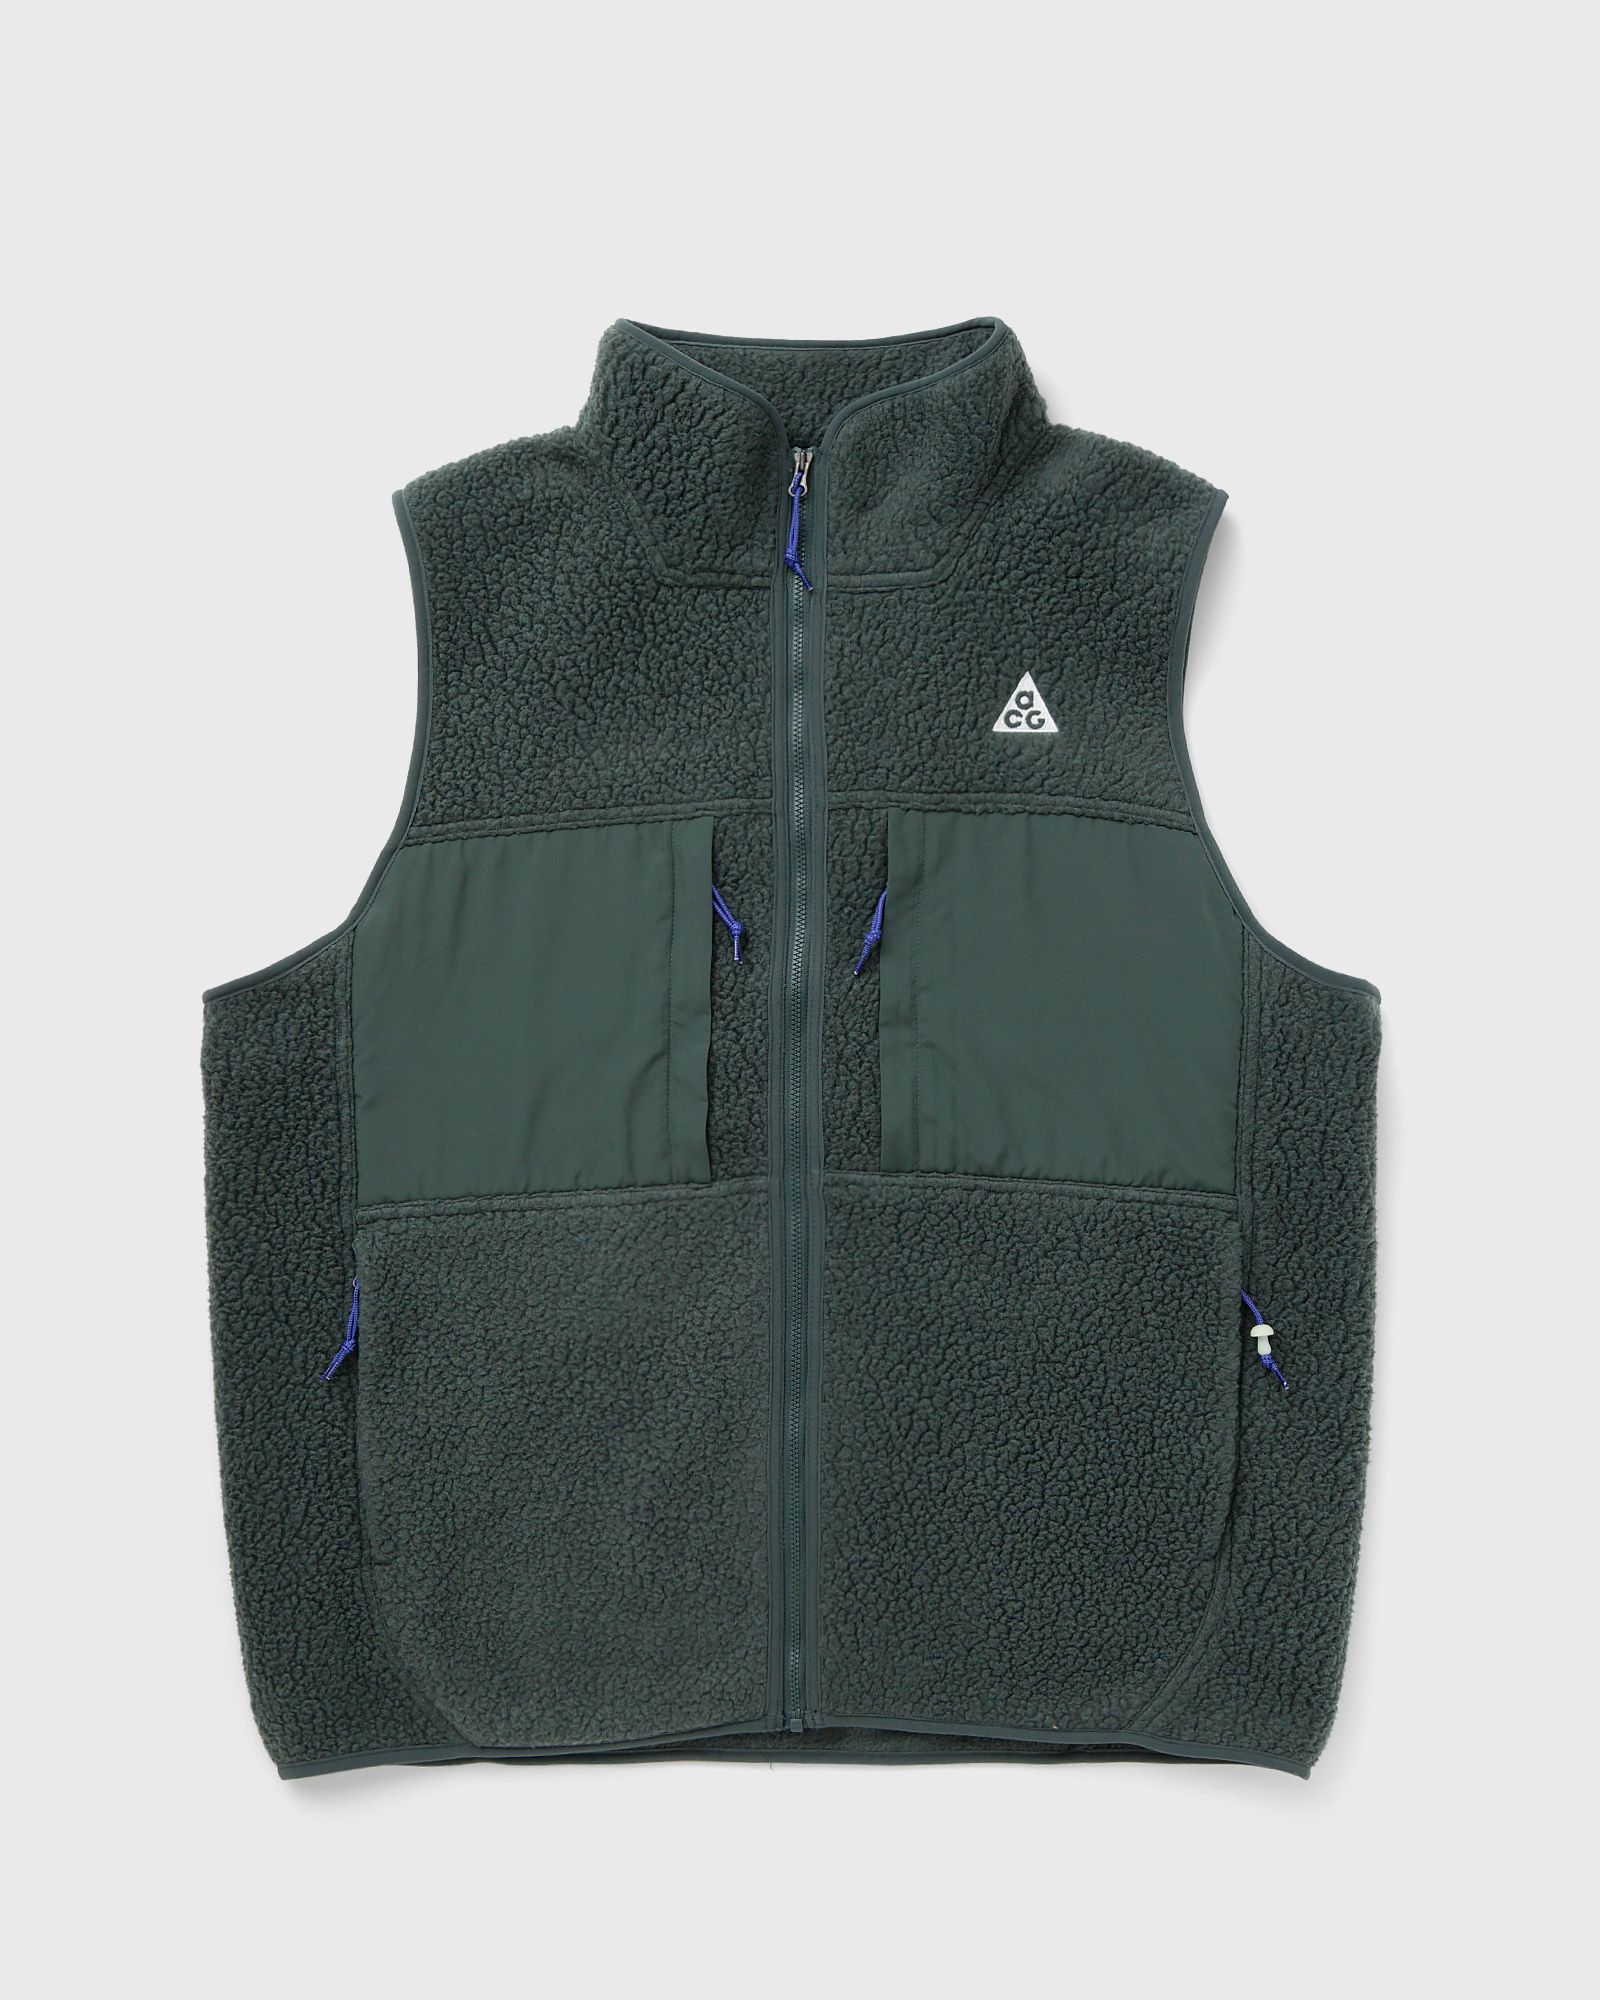 Nike - acg arctic wolf vest men vests green in größe:xxl